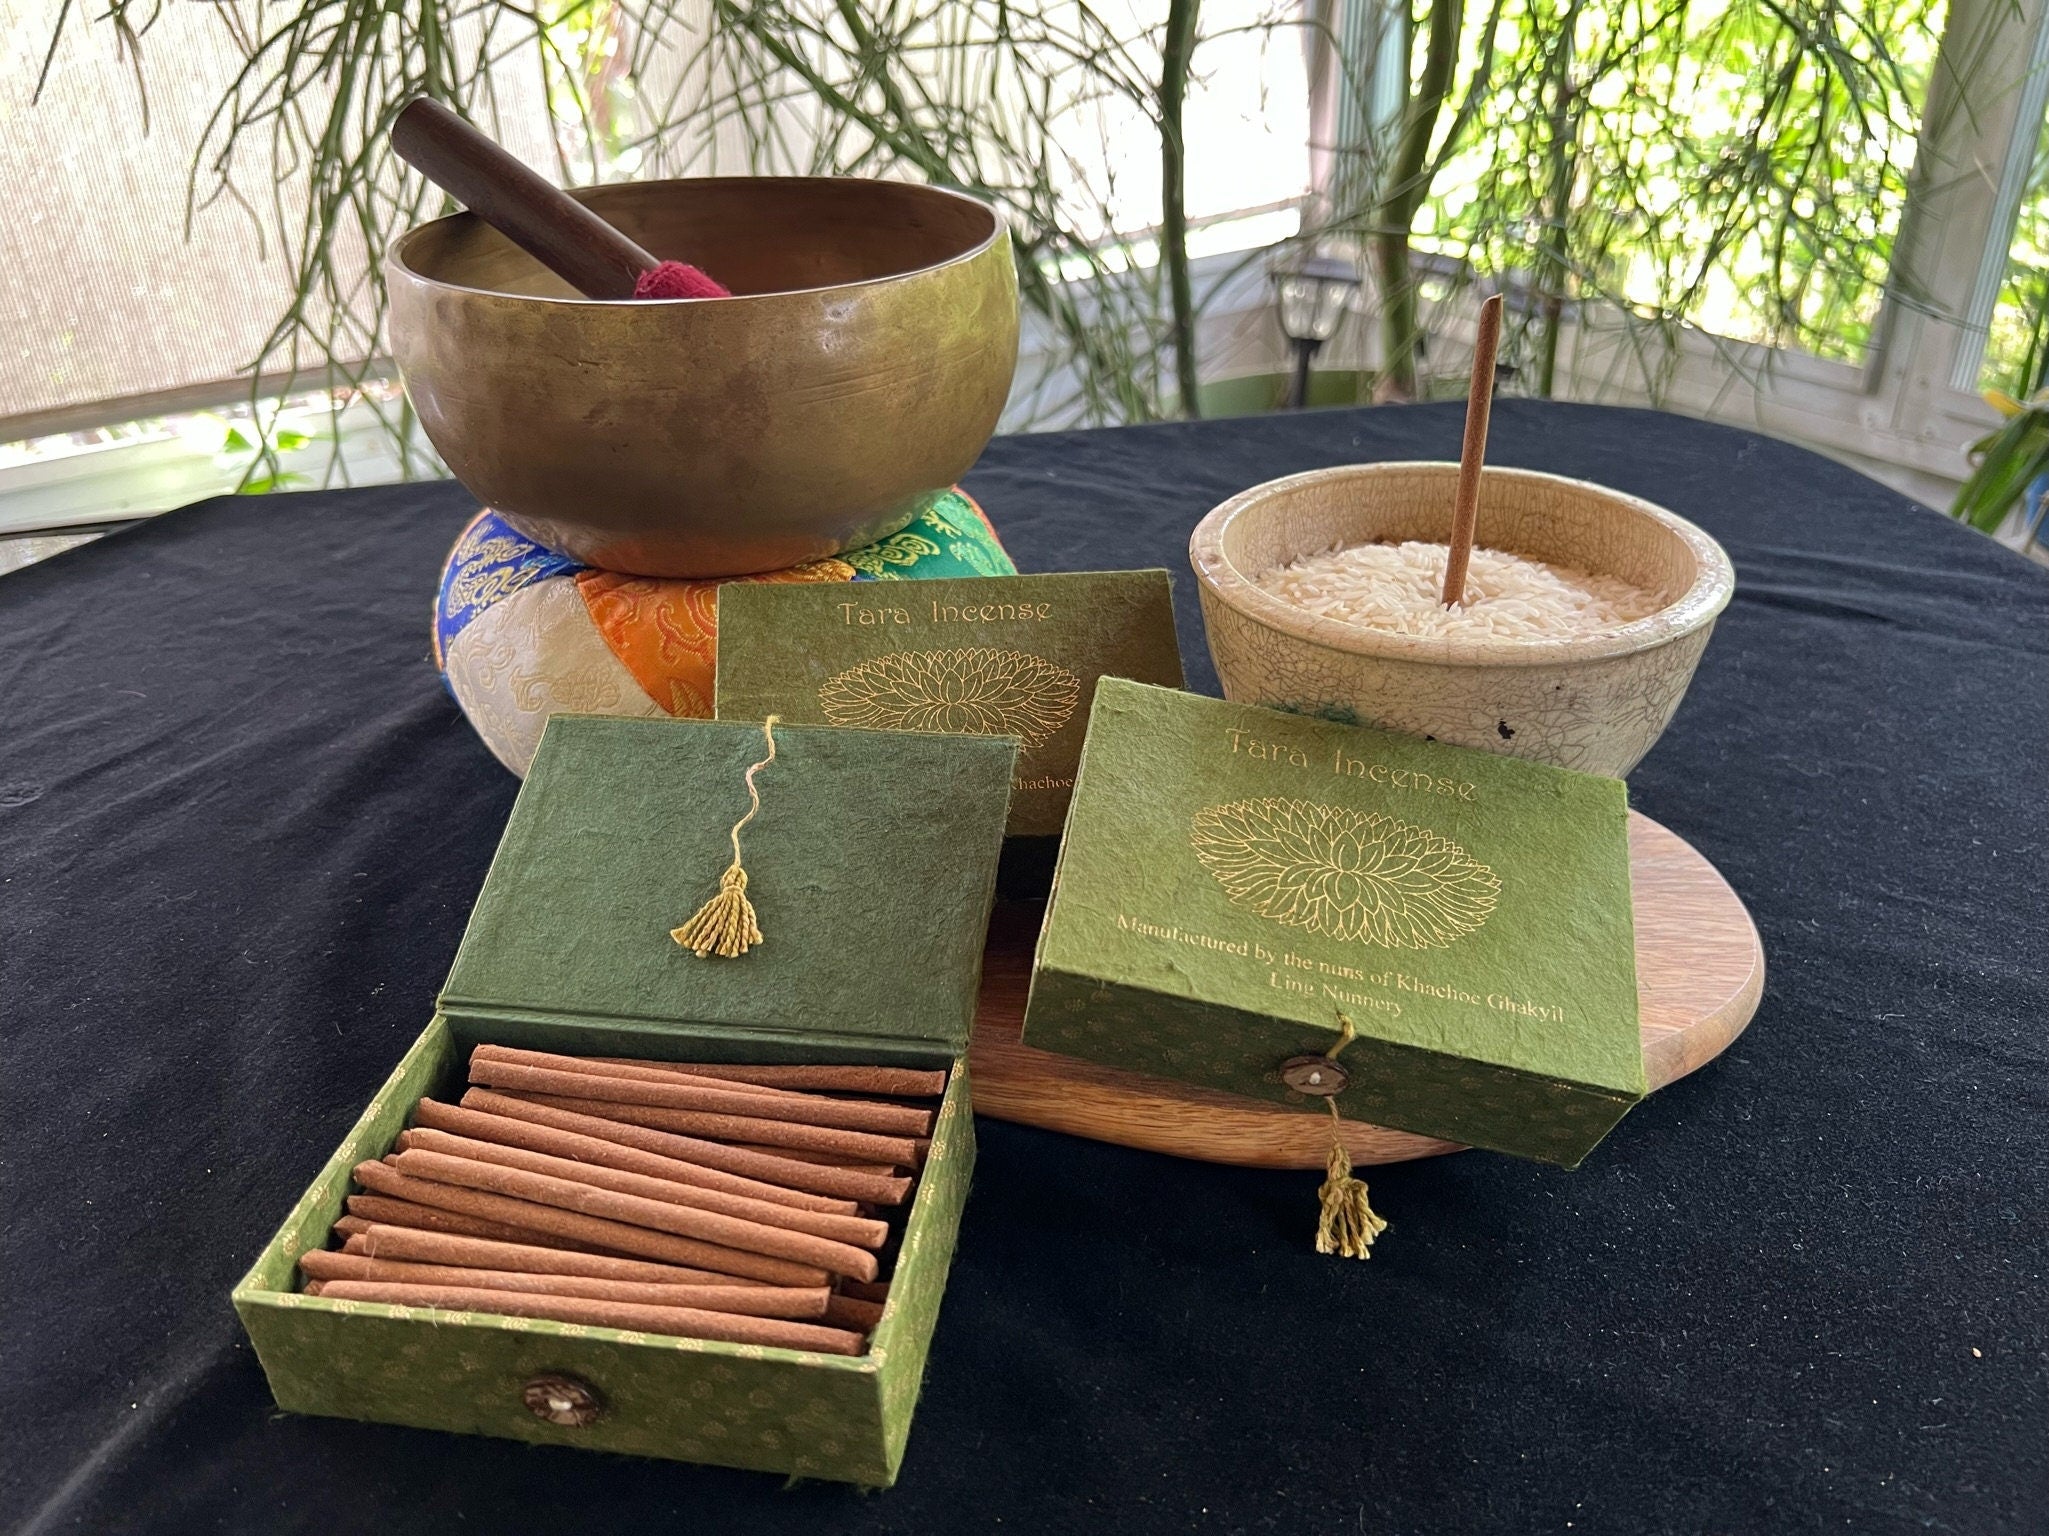 Tara incense  | Tibetan Incense | Aprox 250 grams | Khachoe Ghakyil Ling Nunnery | Nepal| Approx 85 to 95 sticks| 4" long